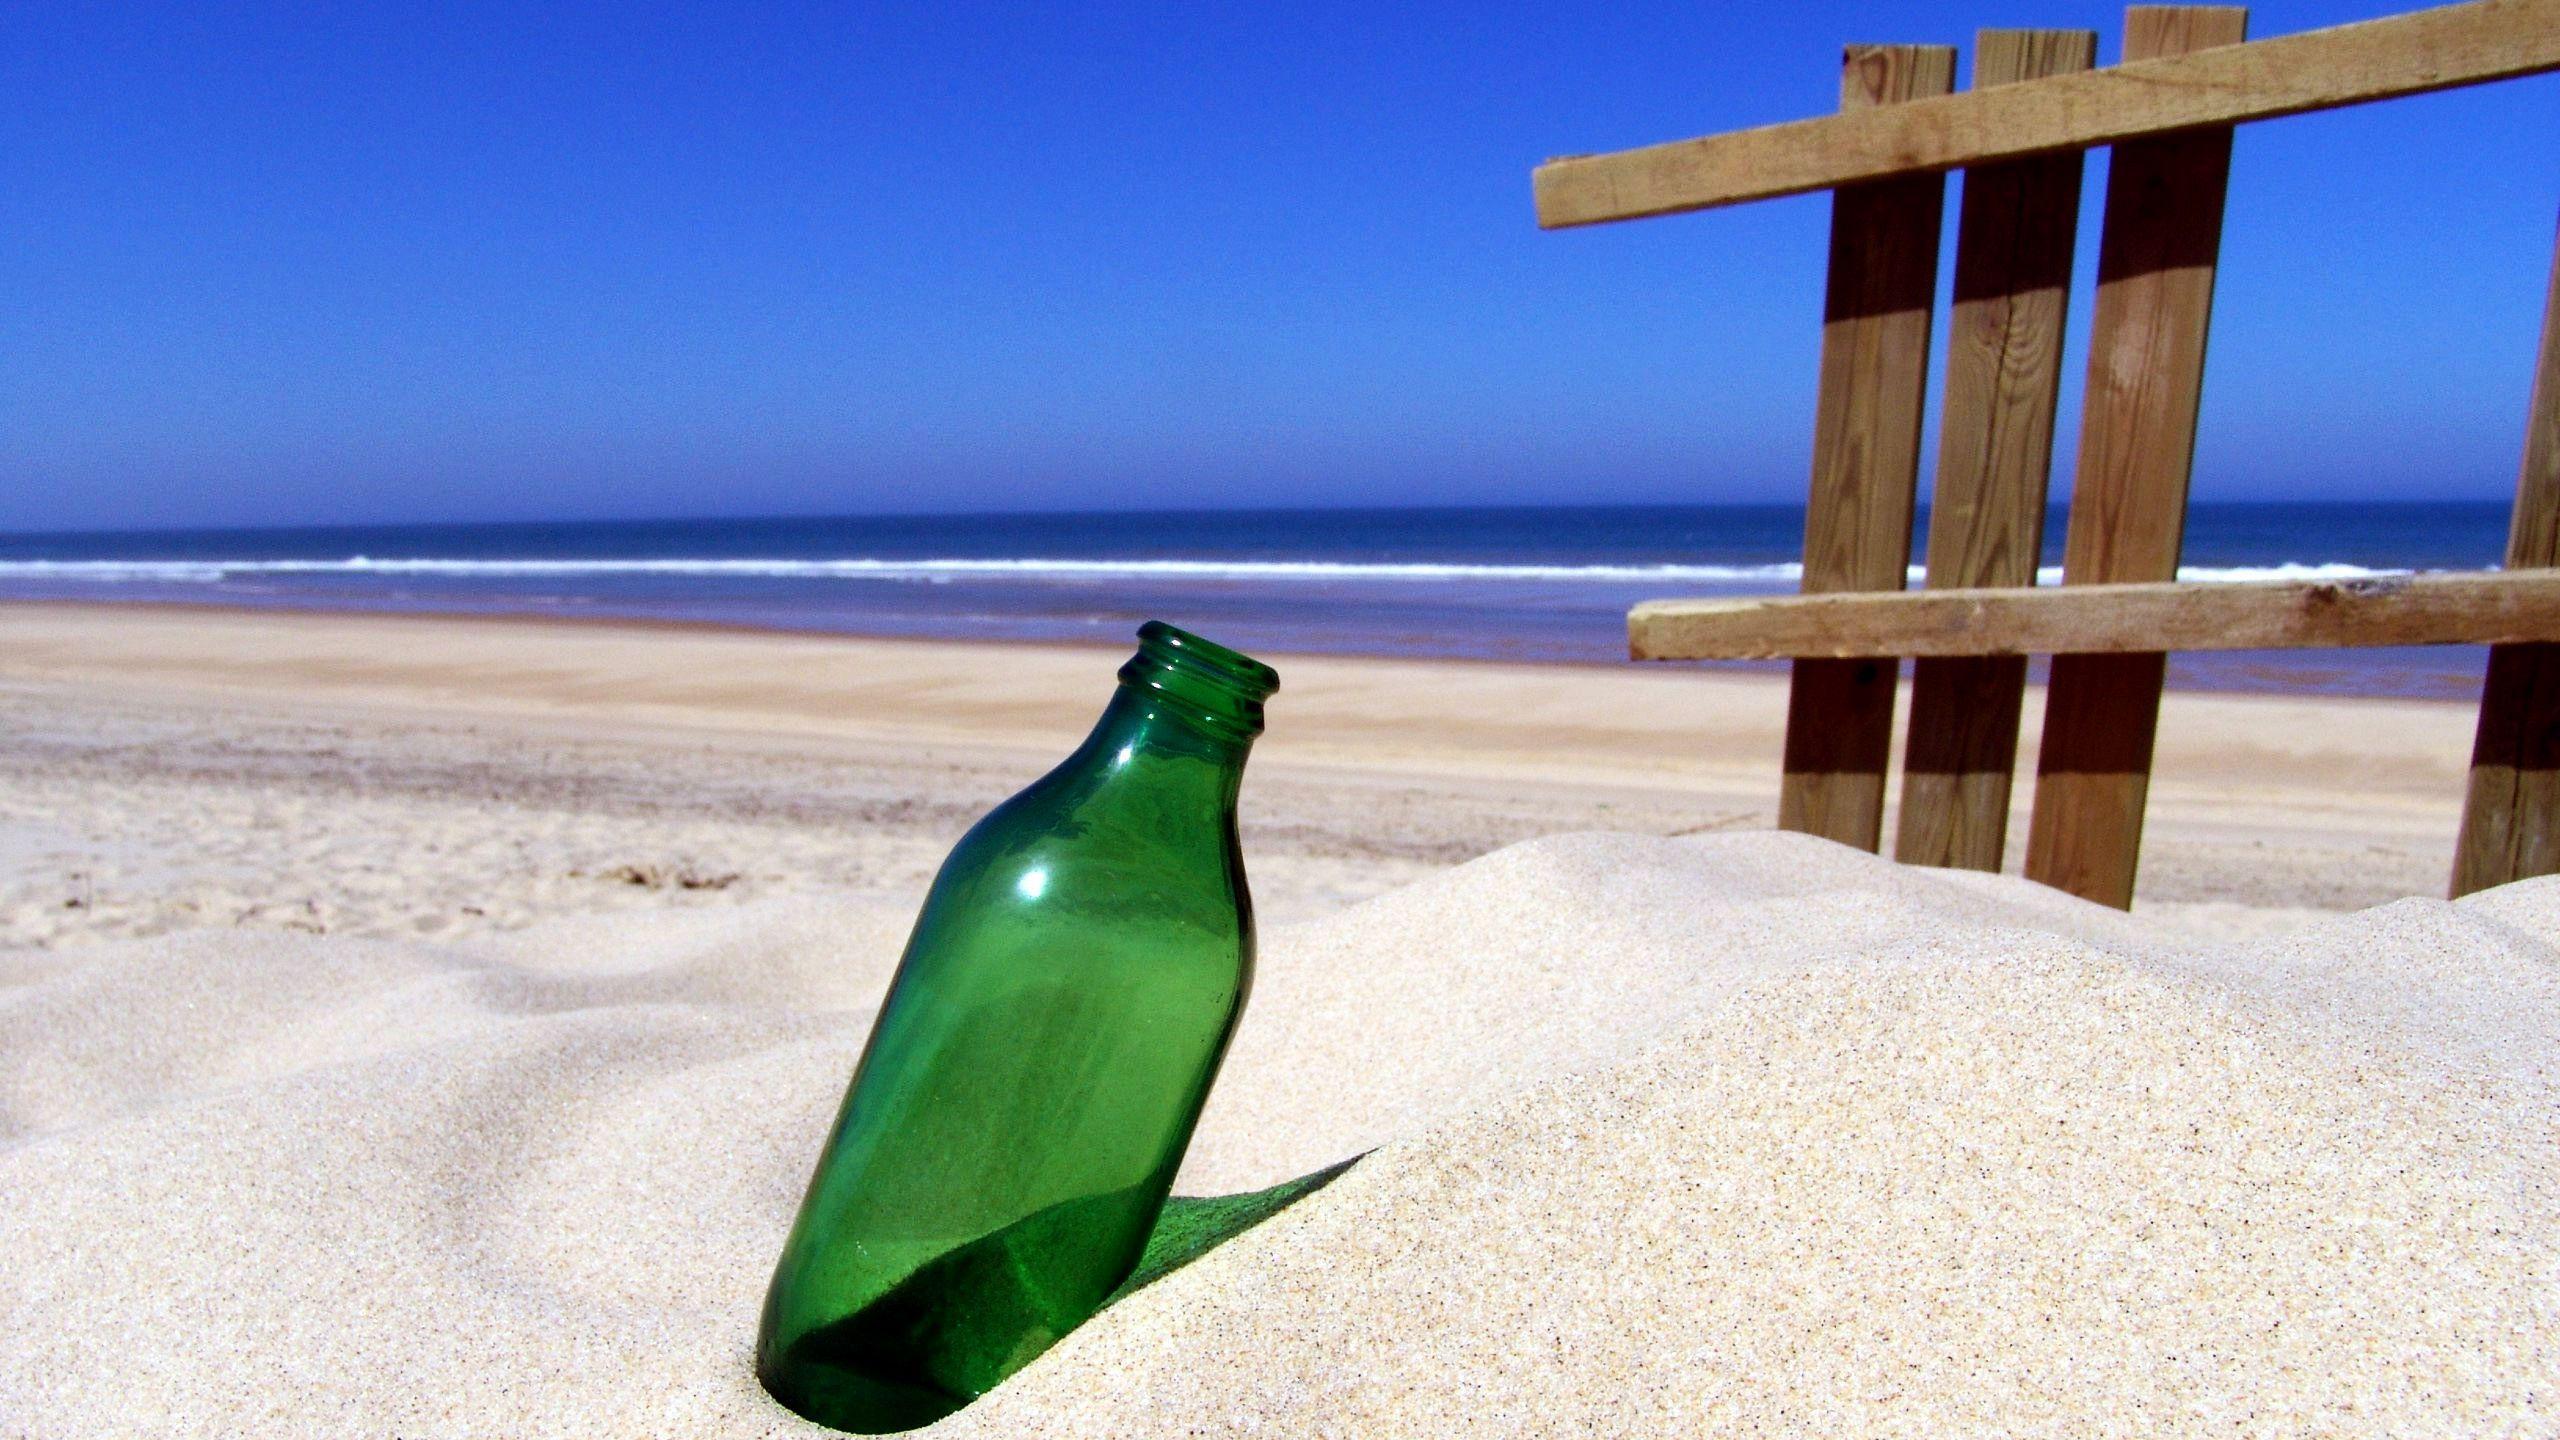 Green bottle on sandy beach wallpaper